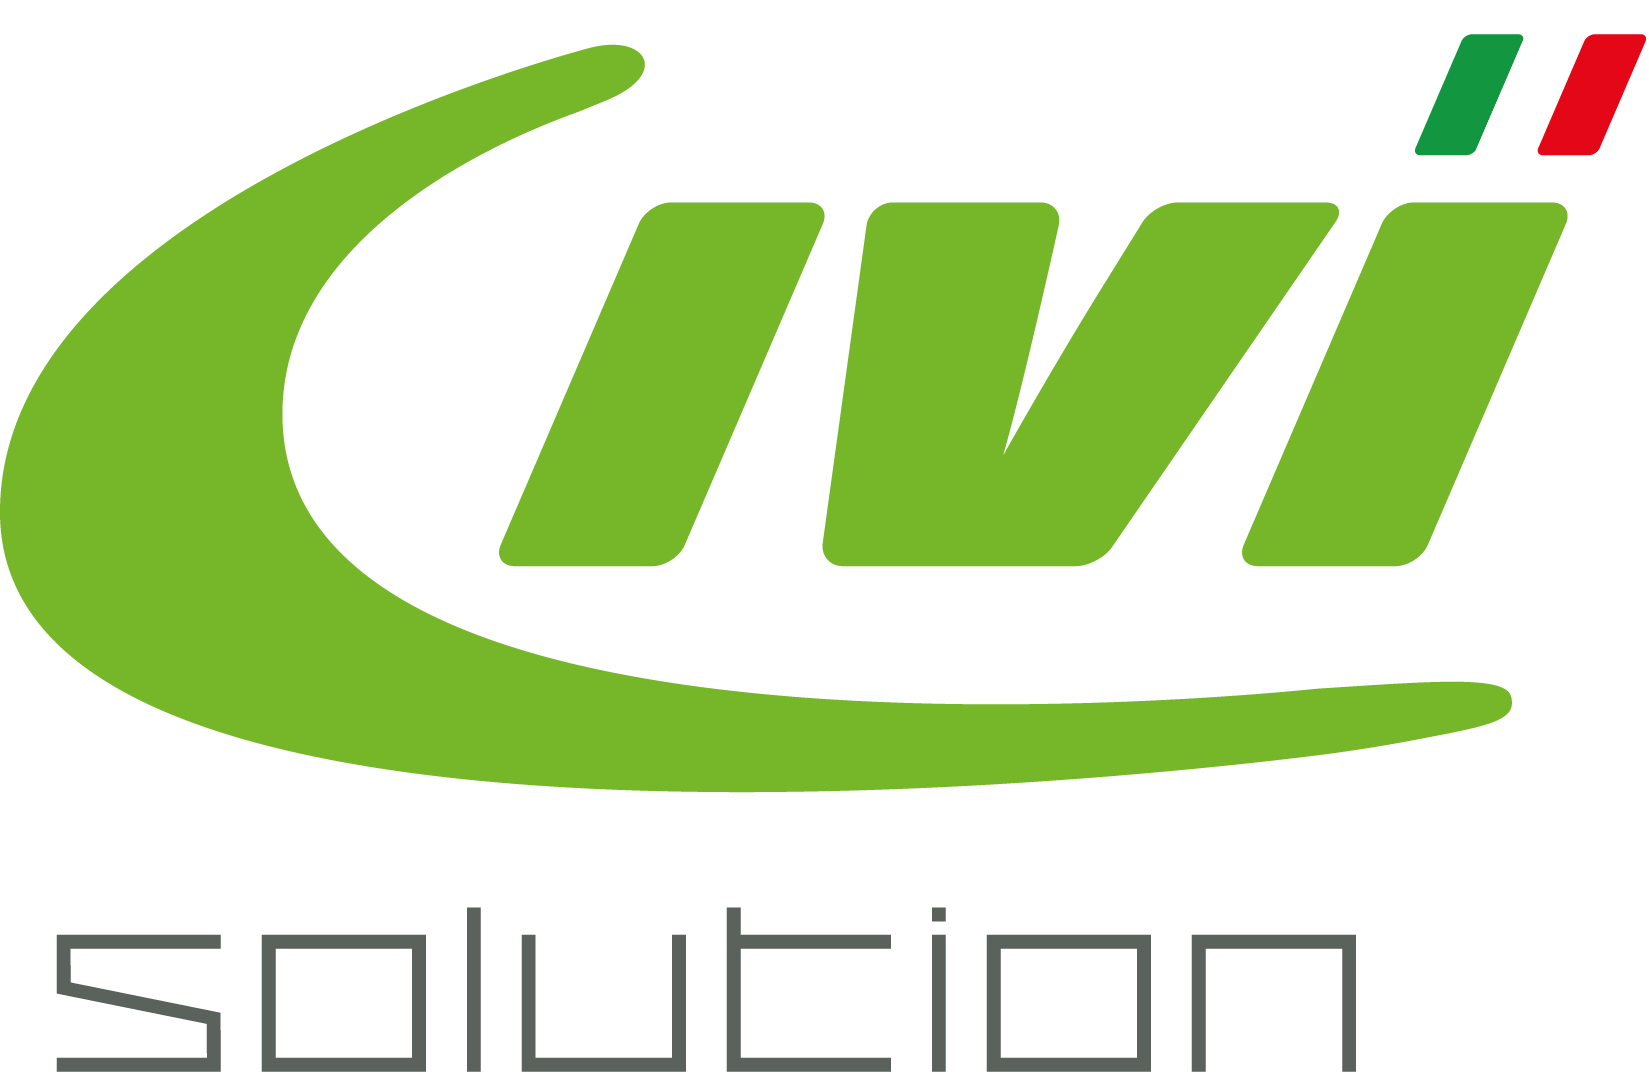 civisolution_logo